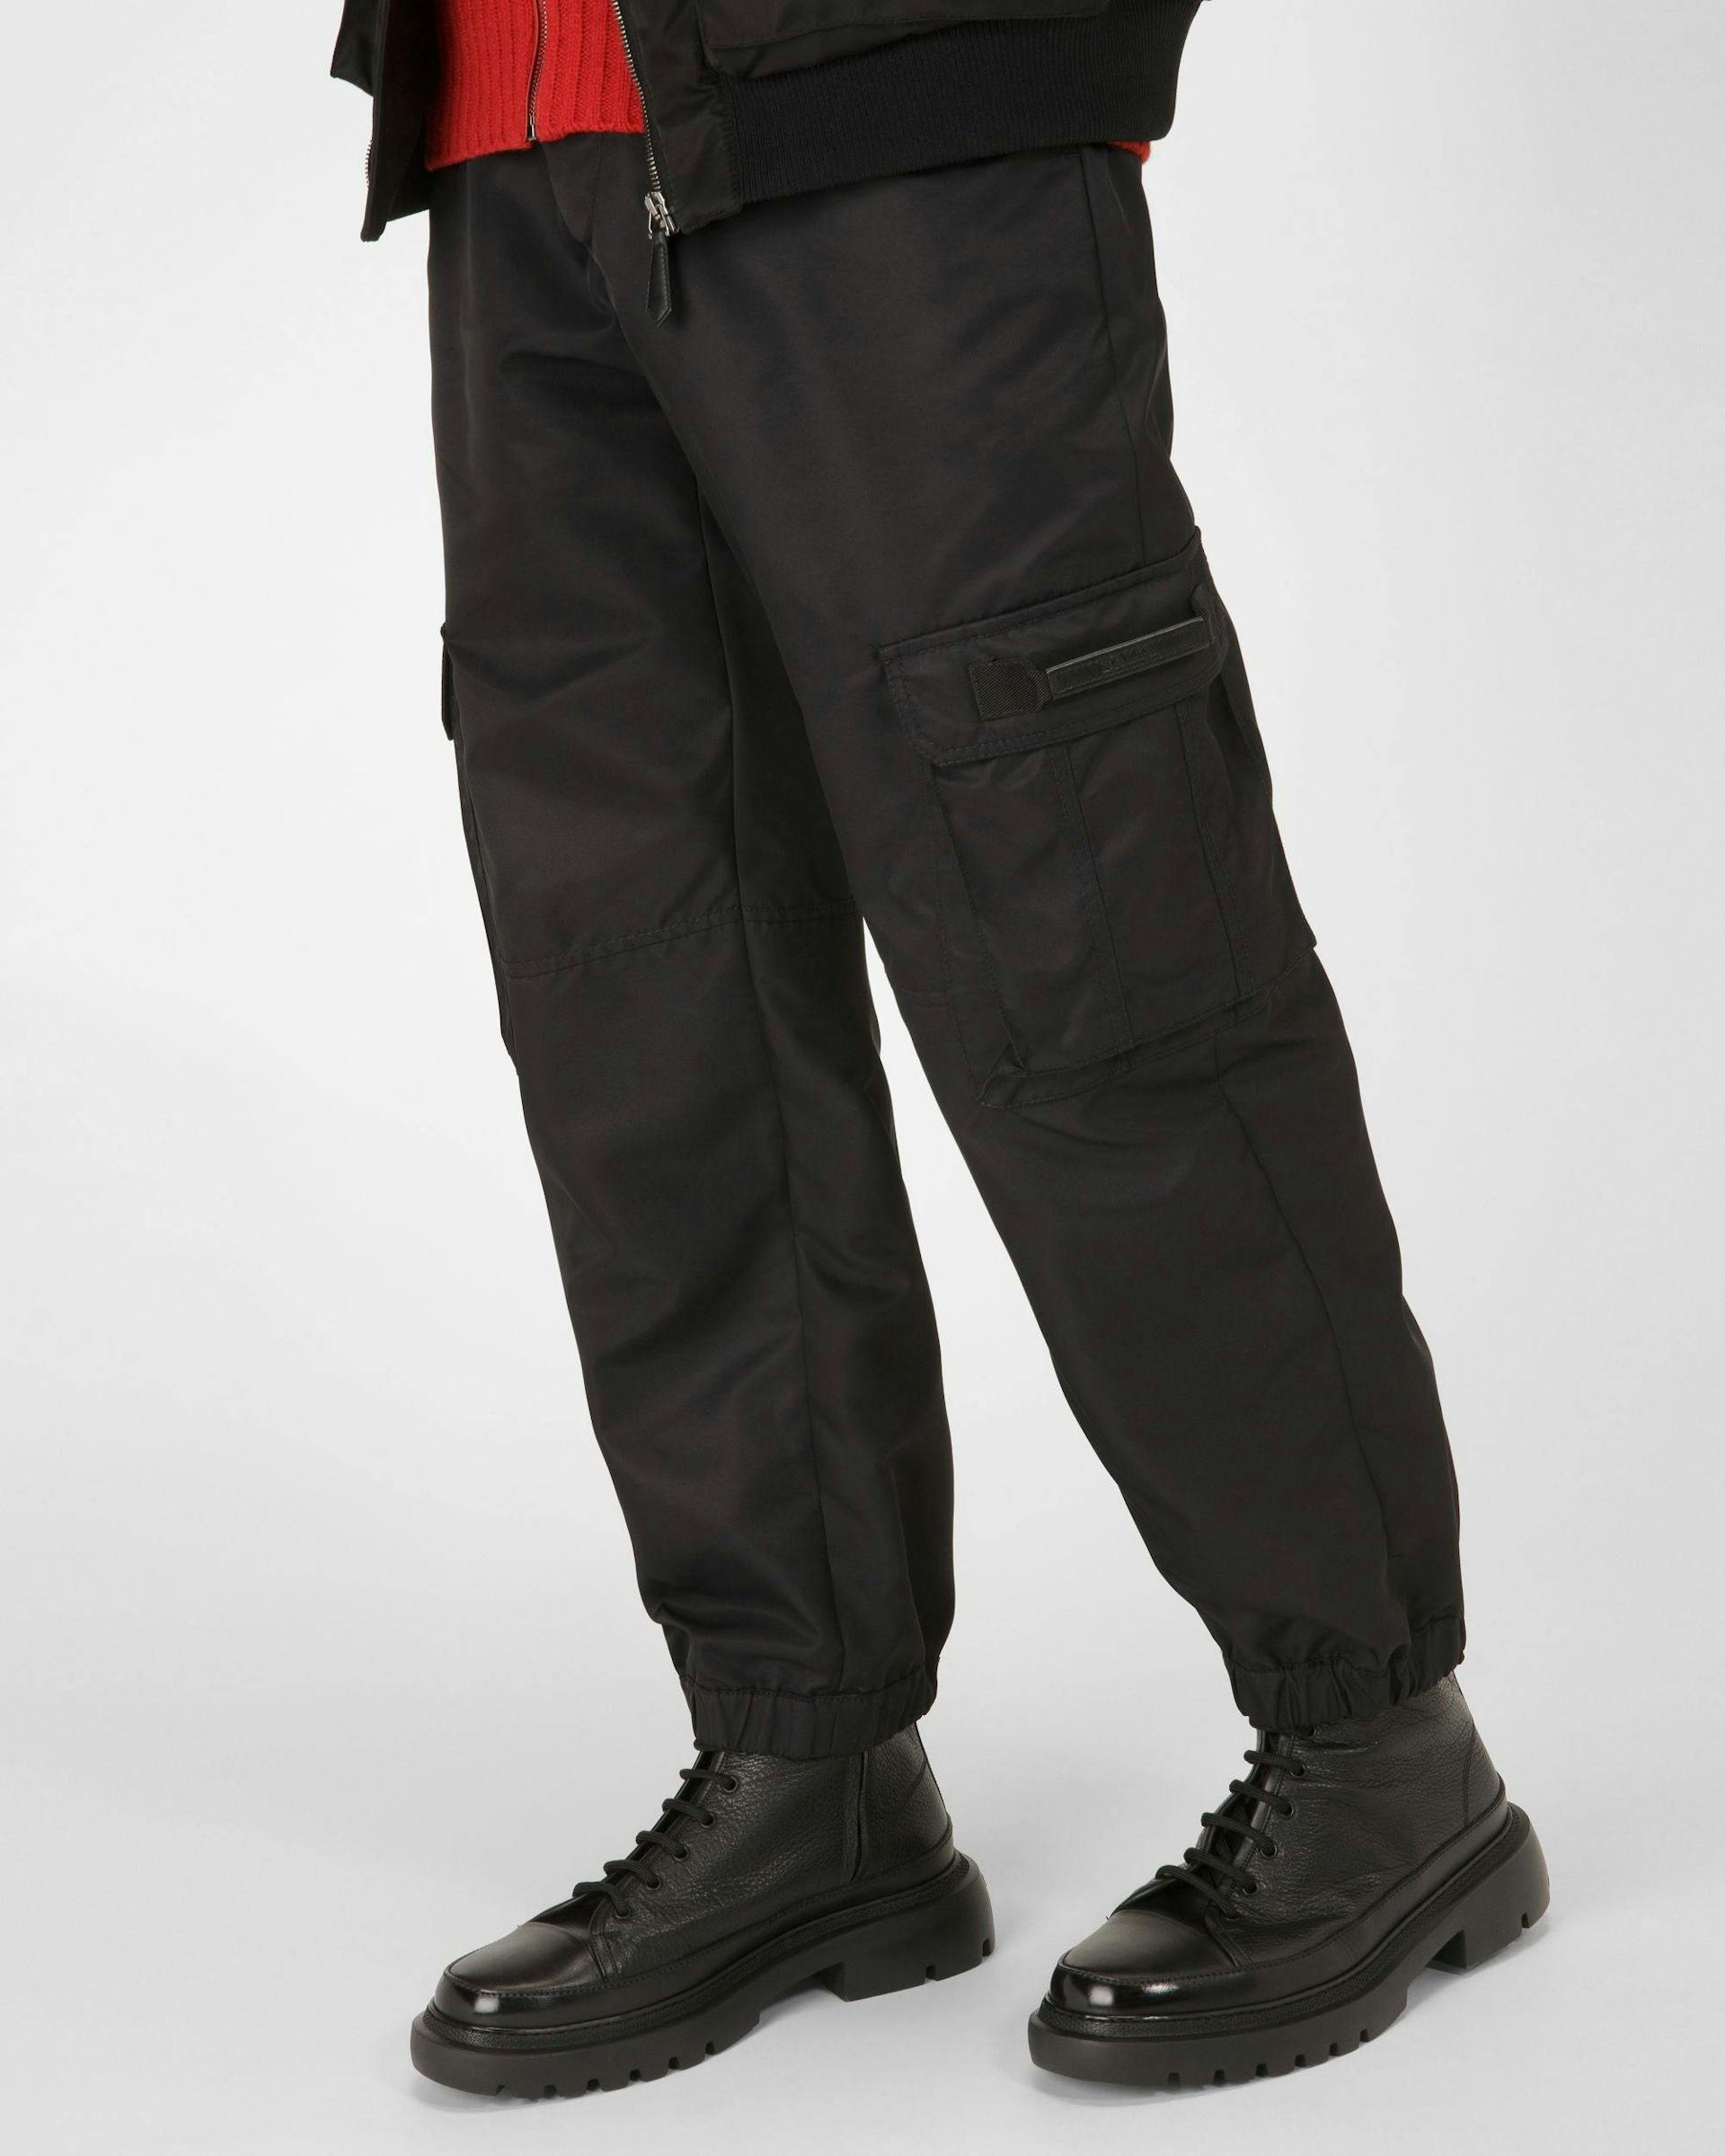 Vatiz Leather Boots In Black - Men's - Bally - 07